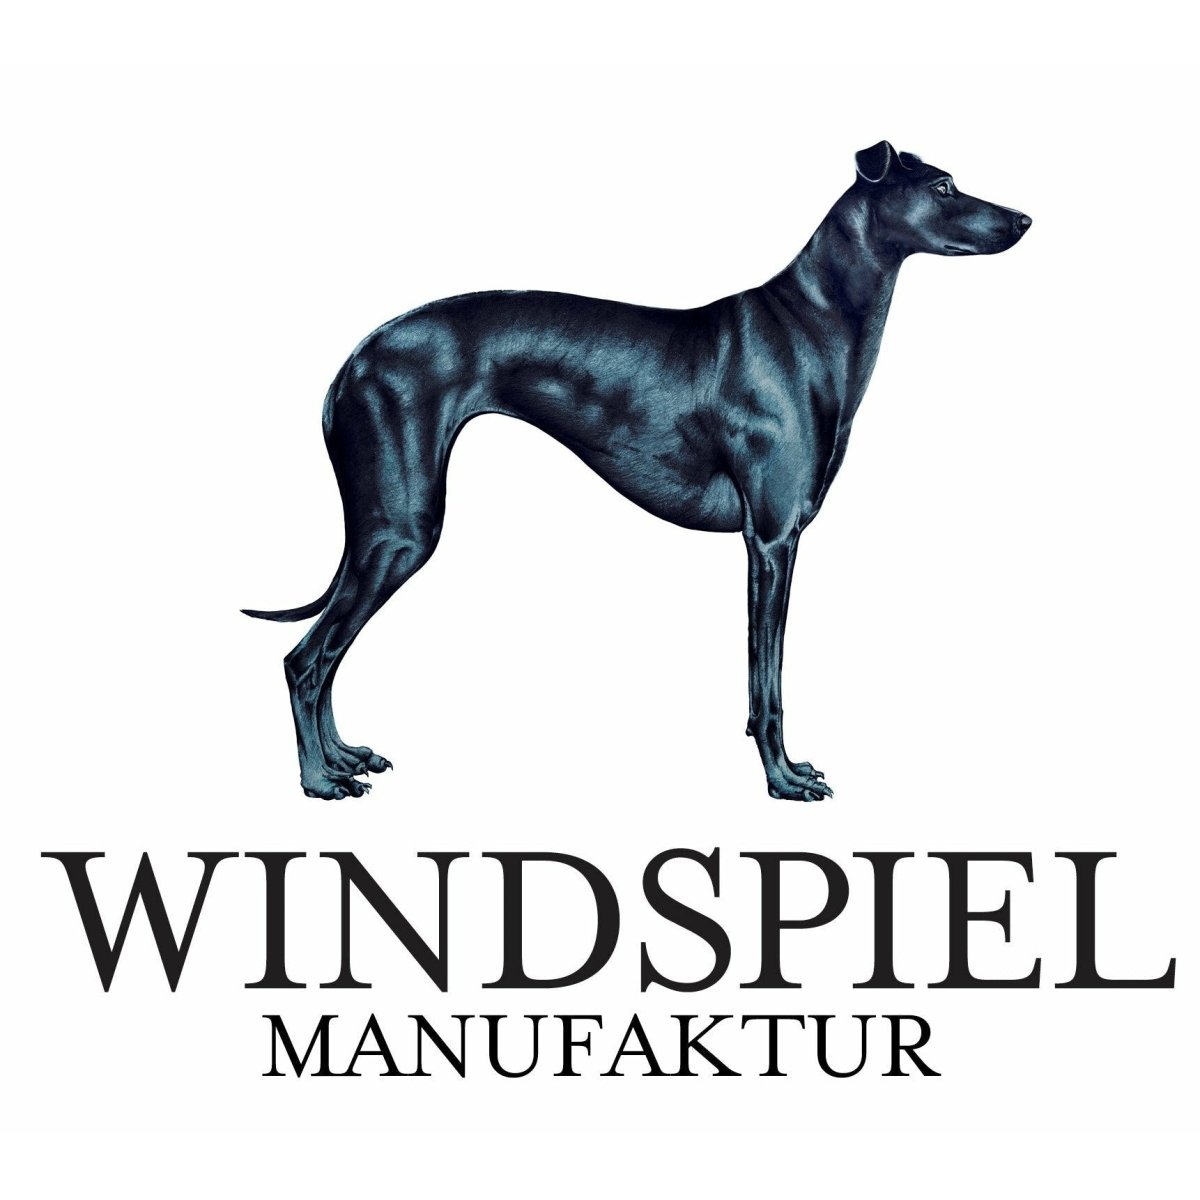 Windspiel Premium Dry Gin Distillers Cut 2020 - GiNFAMILY